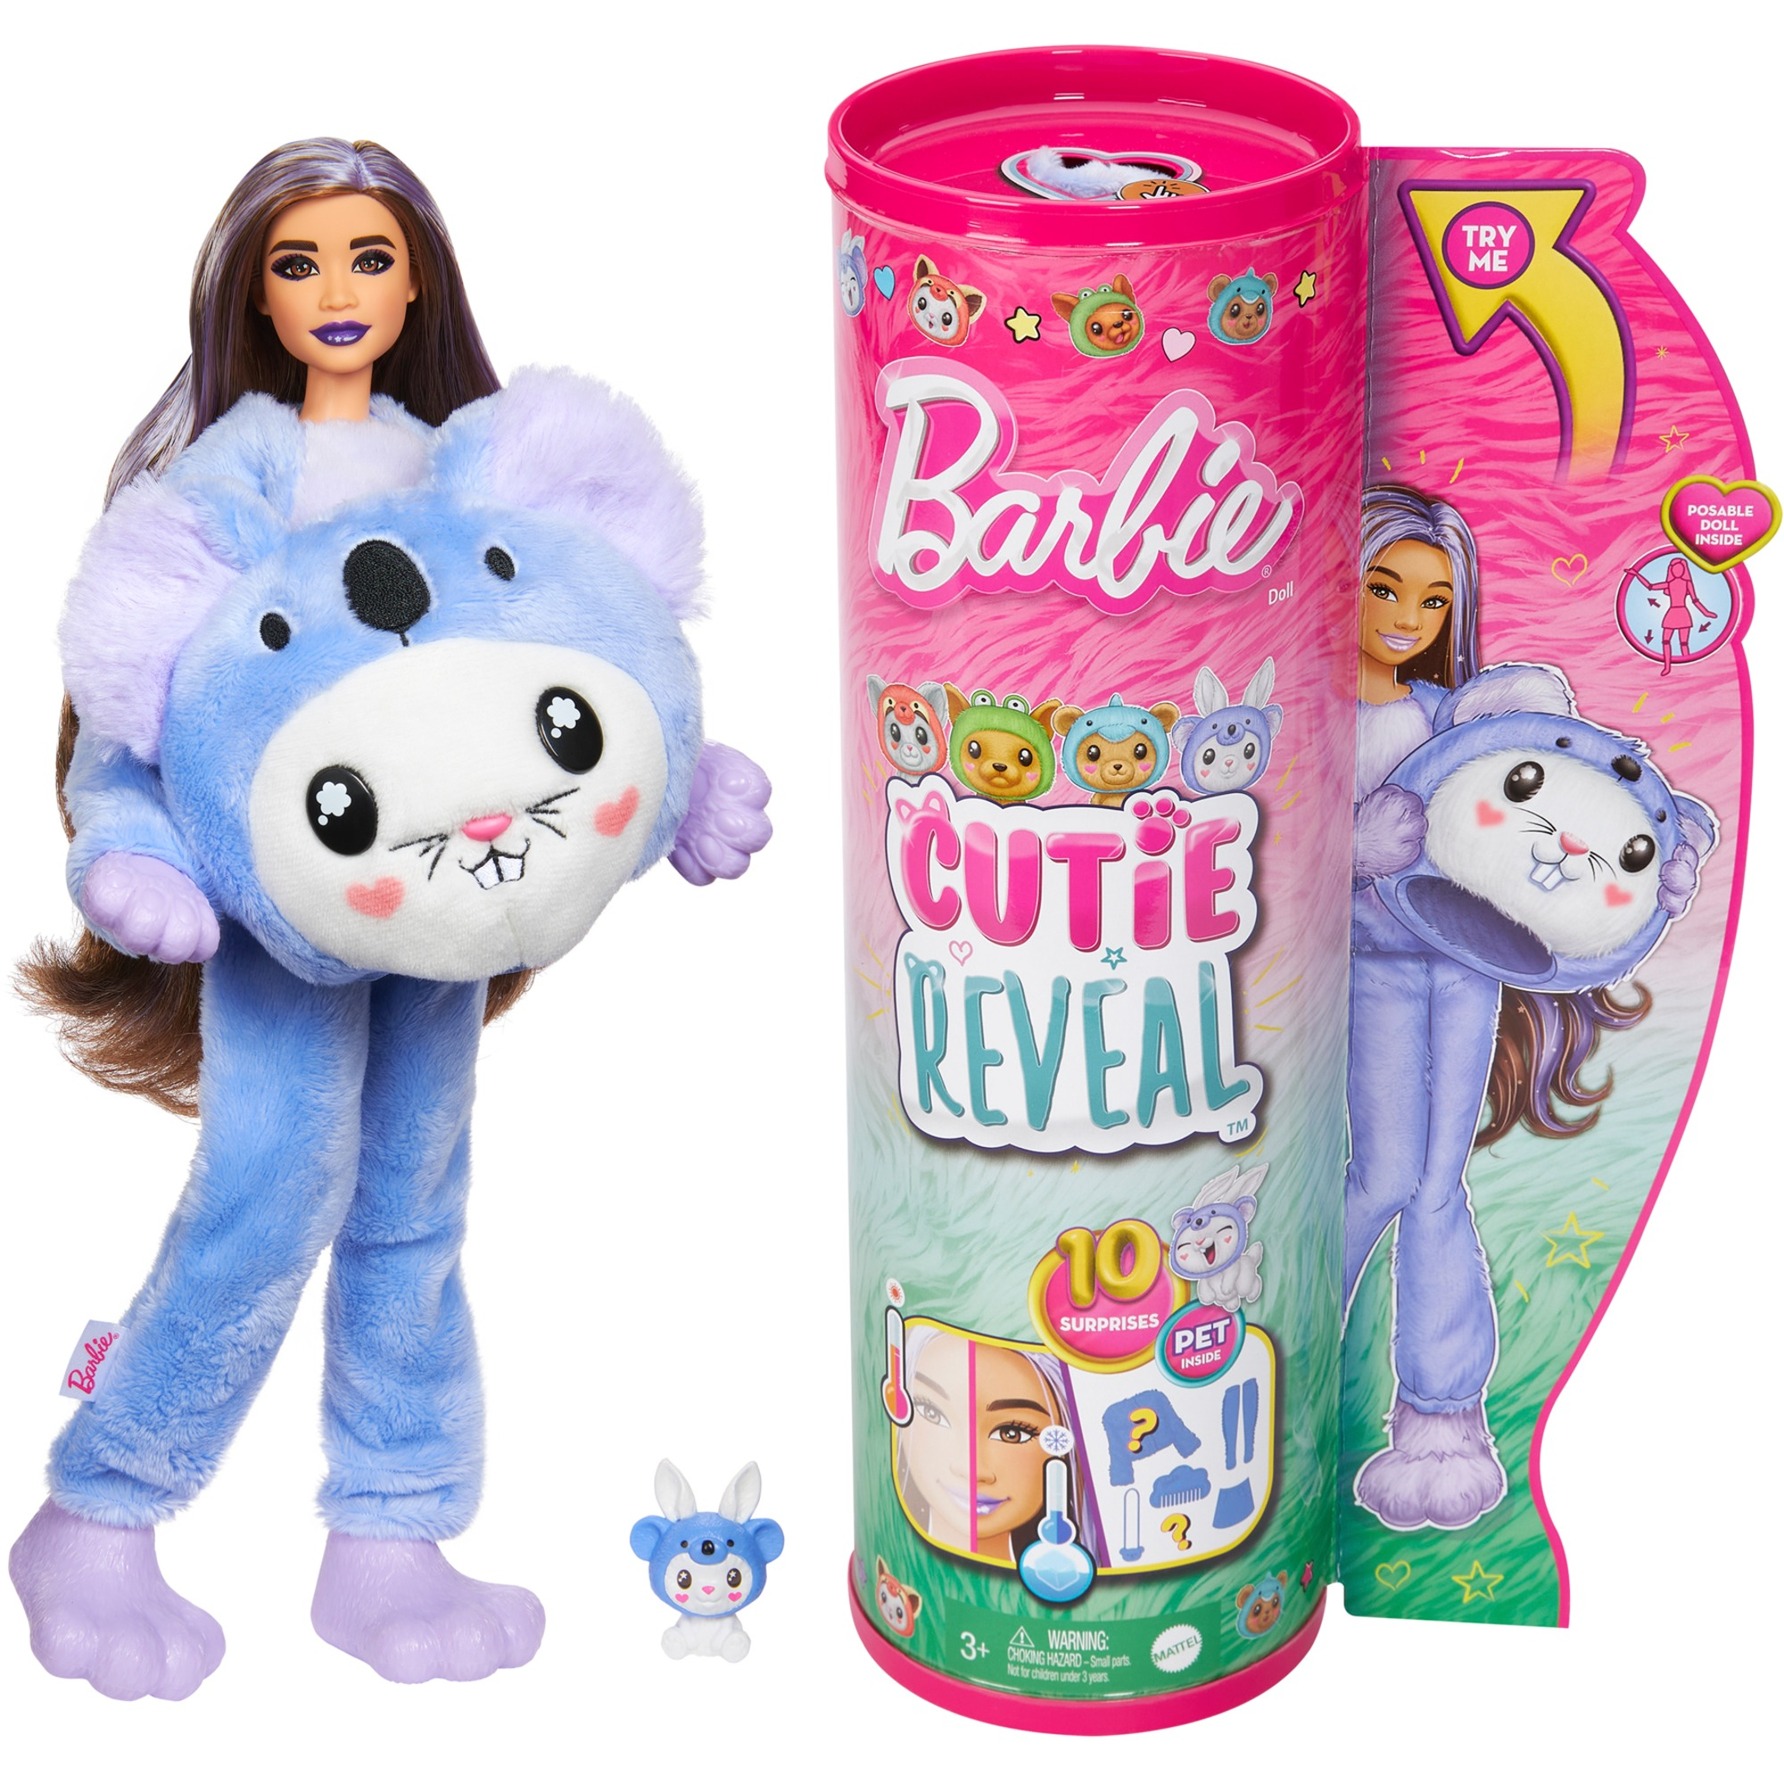 Barbie Cutie Reveal Costume Cuties Serie - Bunny in Koala, Puppe von Mattel